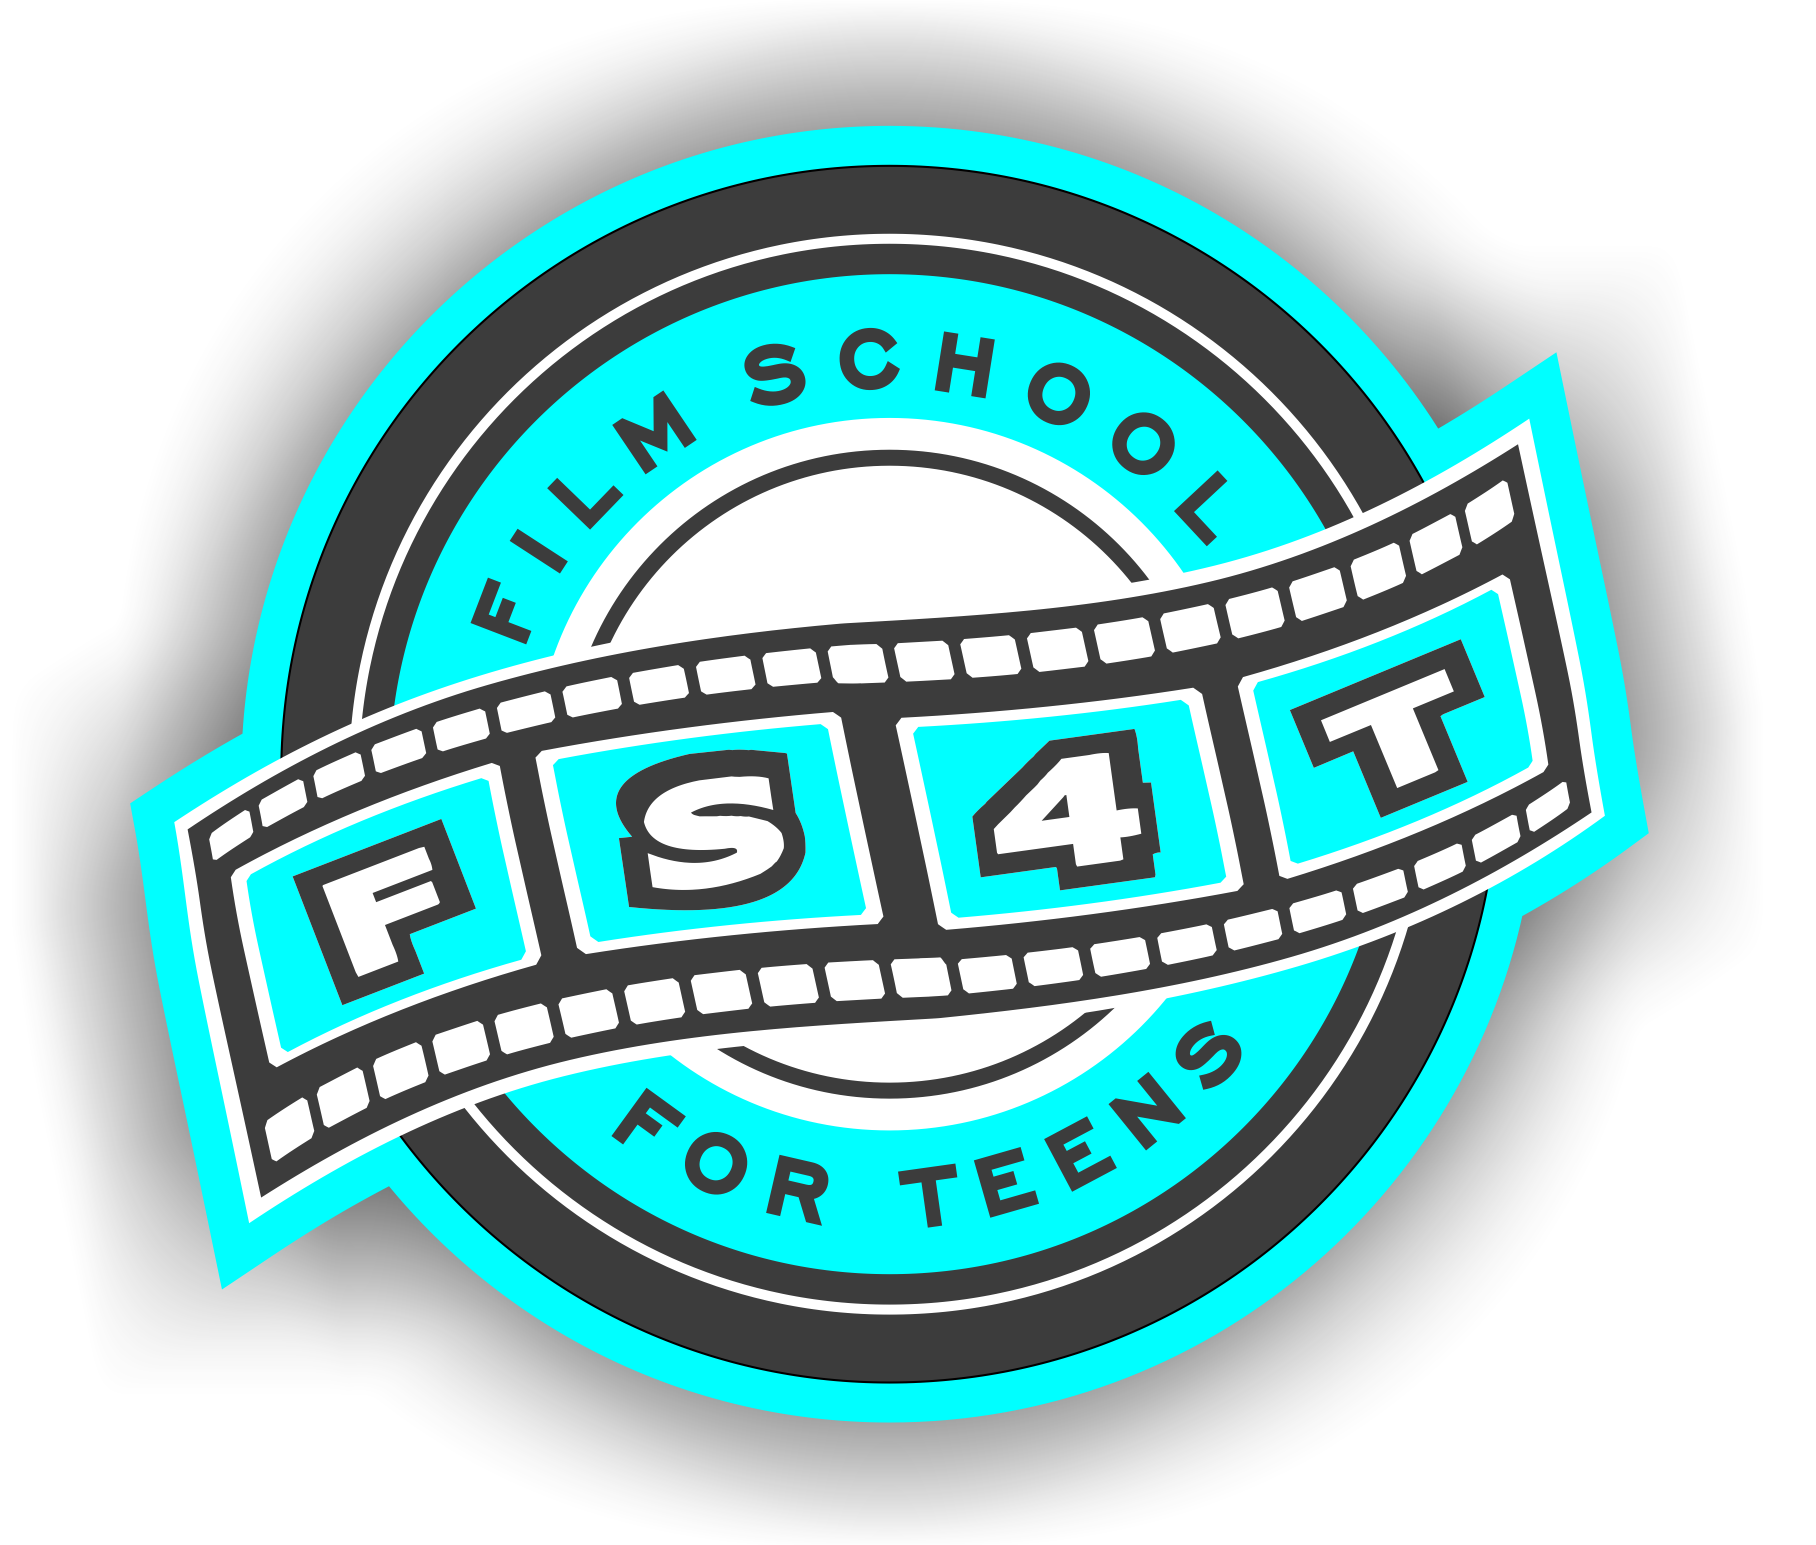 Film School 4 Teens logo